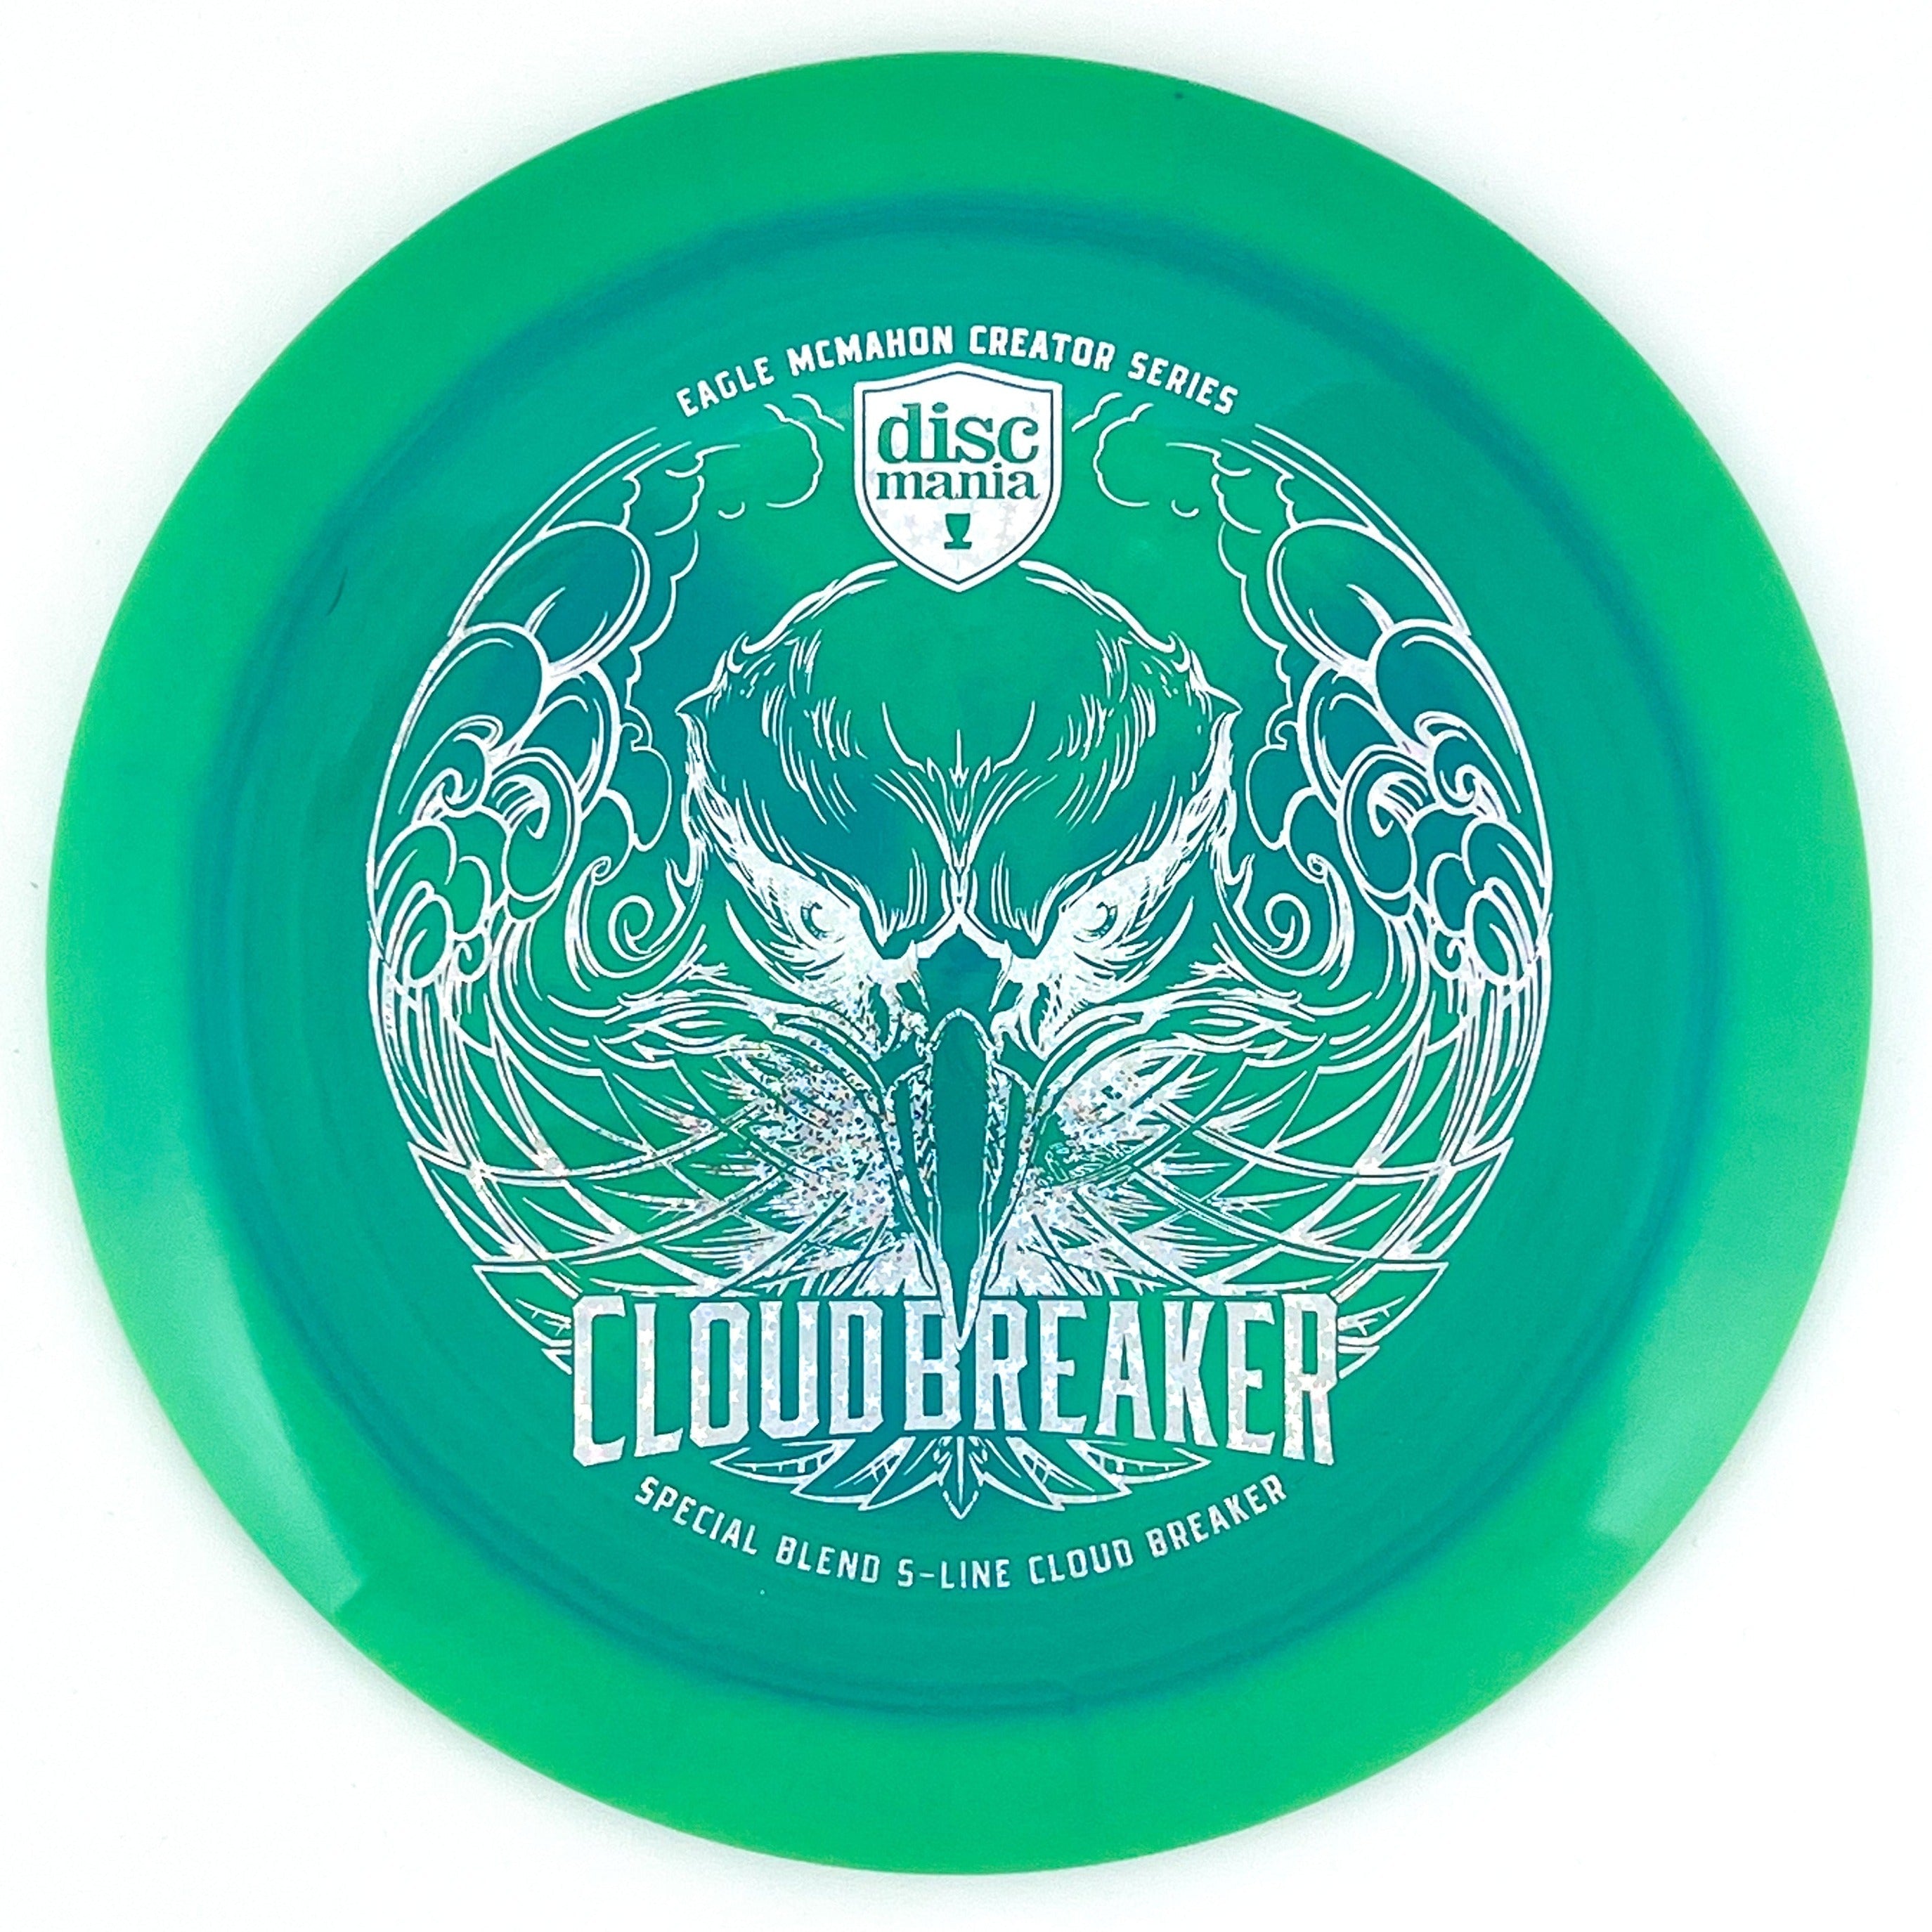 Green Eagle McMahon Creator Series Cloud Breaker disc golf distance driver by Discmania Golf Discs.